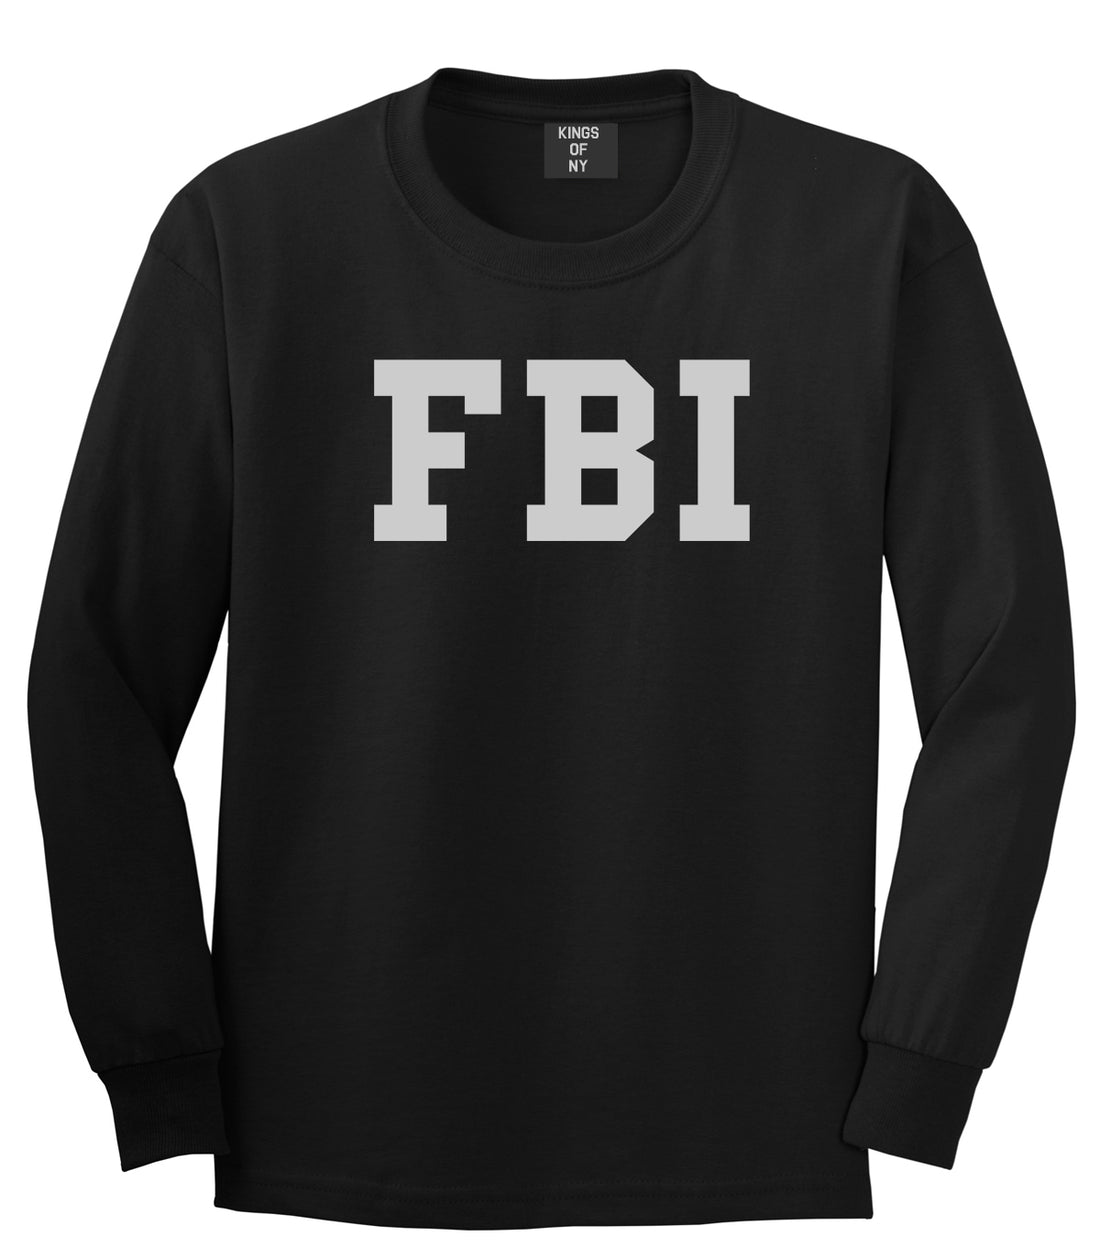 FBI Law Enforcement Mens Black Long Sleeve T-Shirt by KINGS OF NY